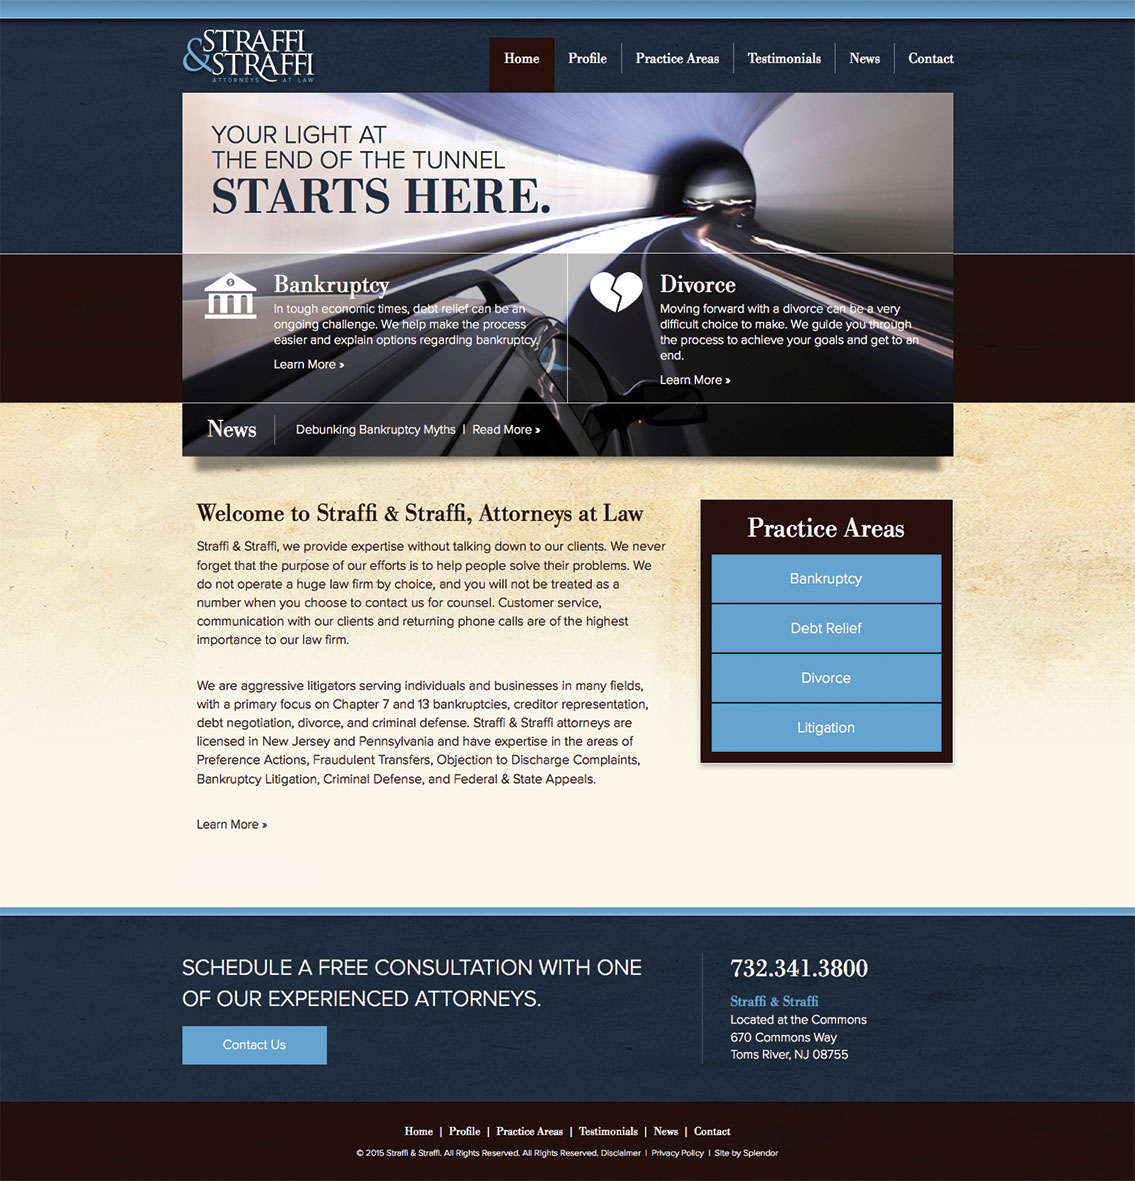 Straffi and Straffi Attorneys At Law Website Design.